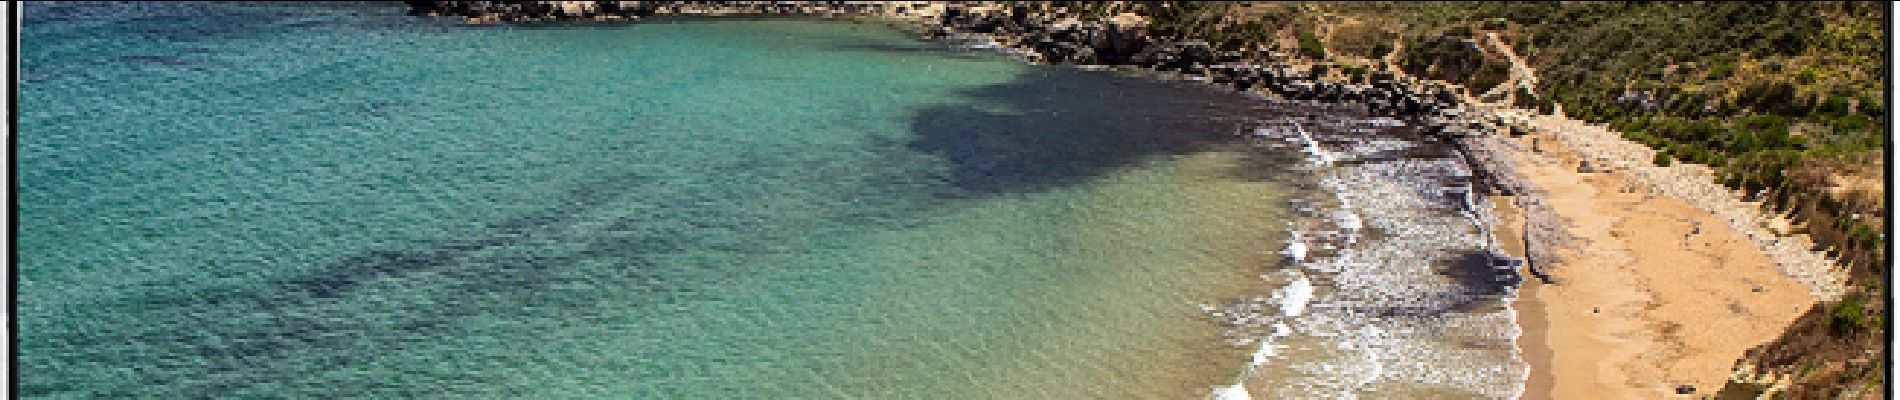 POI Il-Mellieħa - Mgiebah Bay - Photo